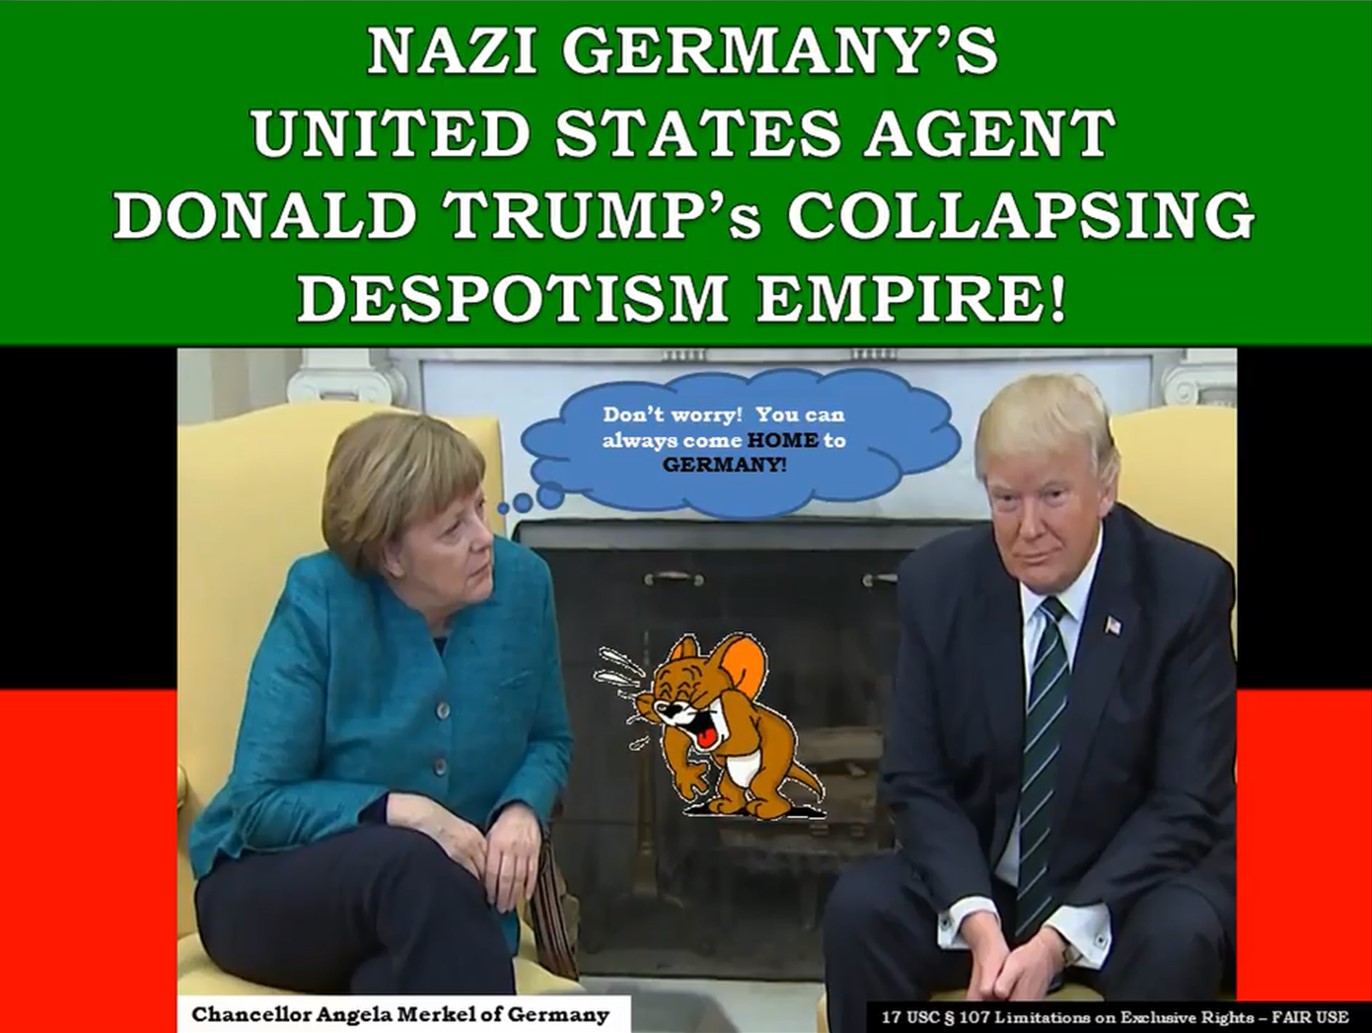 Nazi Germany COLLAPSING United States DESPOTISM Empire